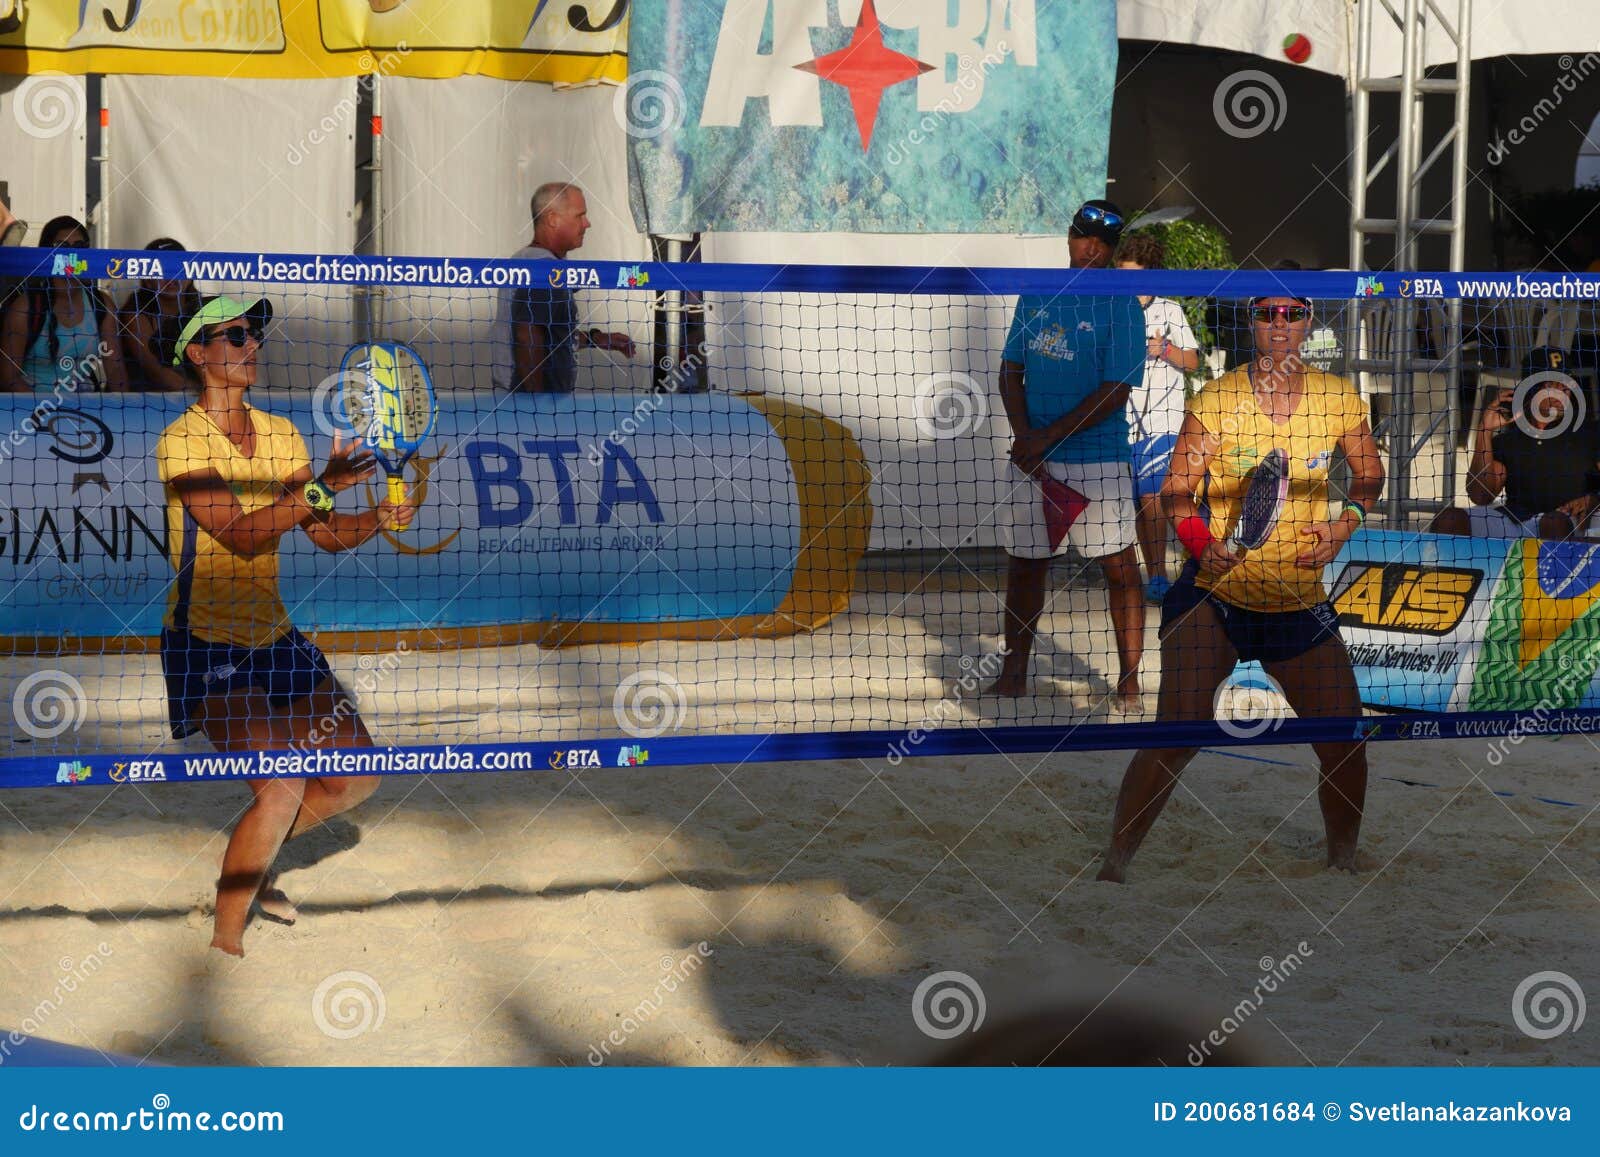 Beach tennis at aruba editorial stock image. Image of beach - 200681684